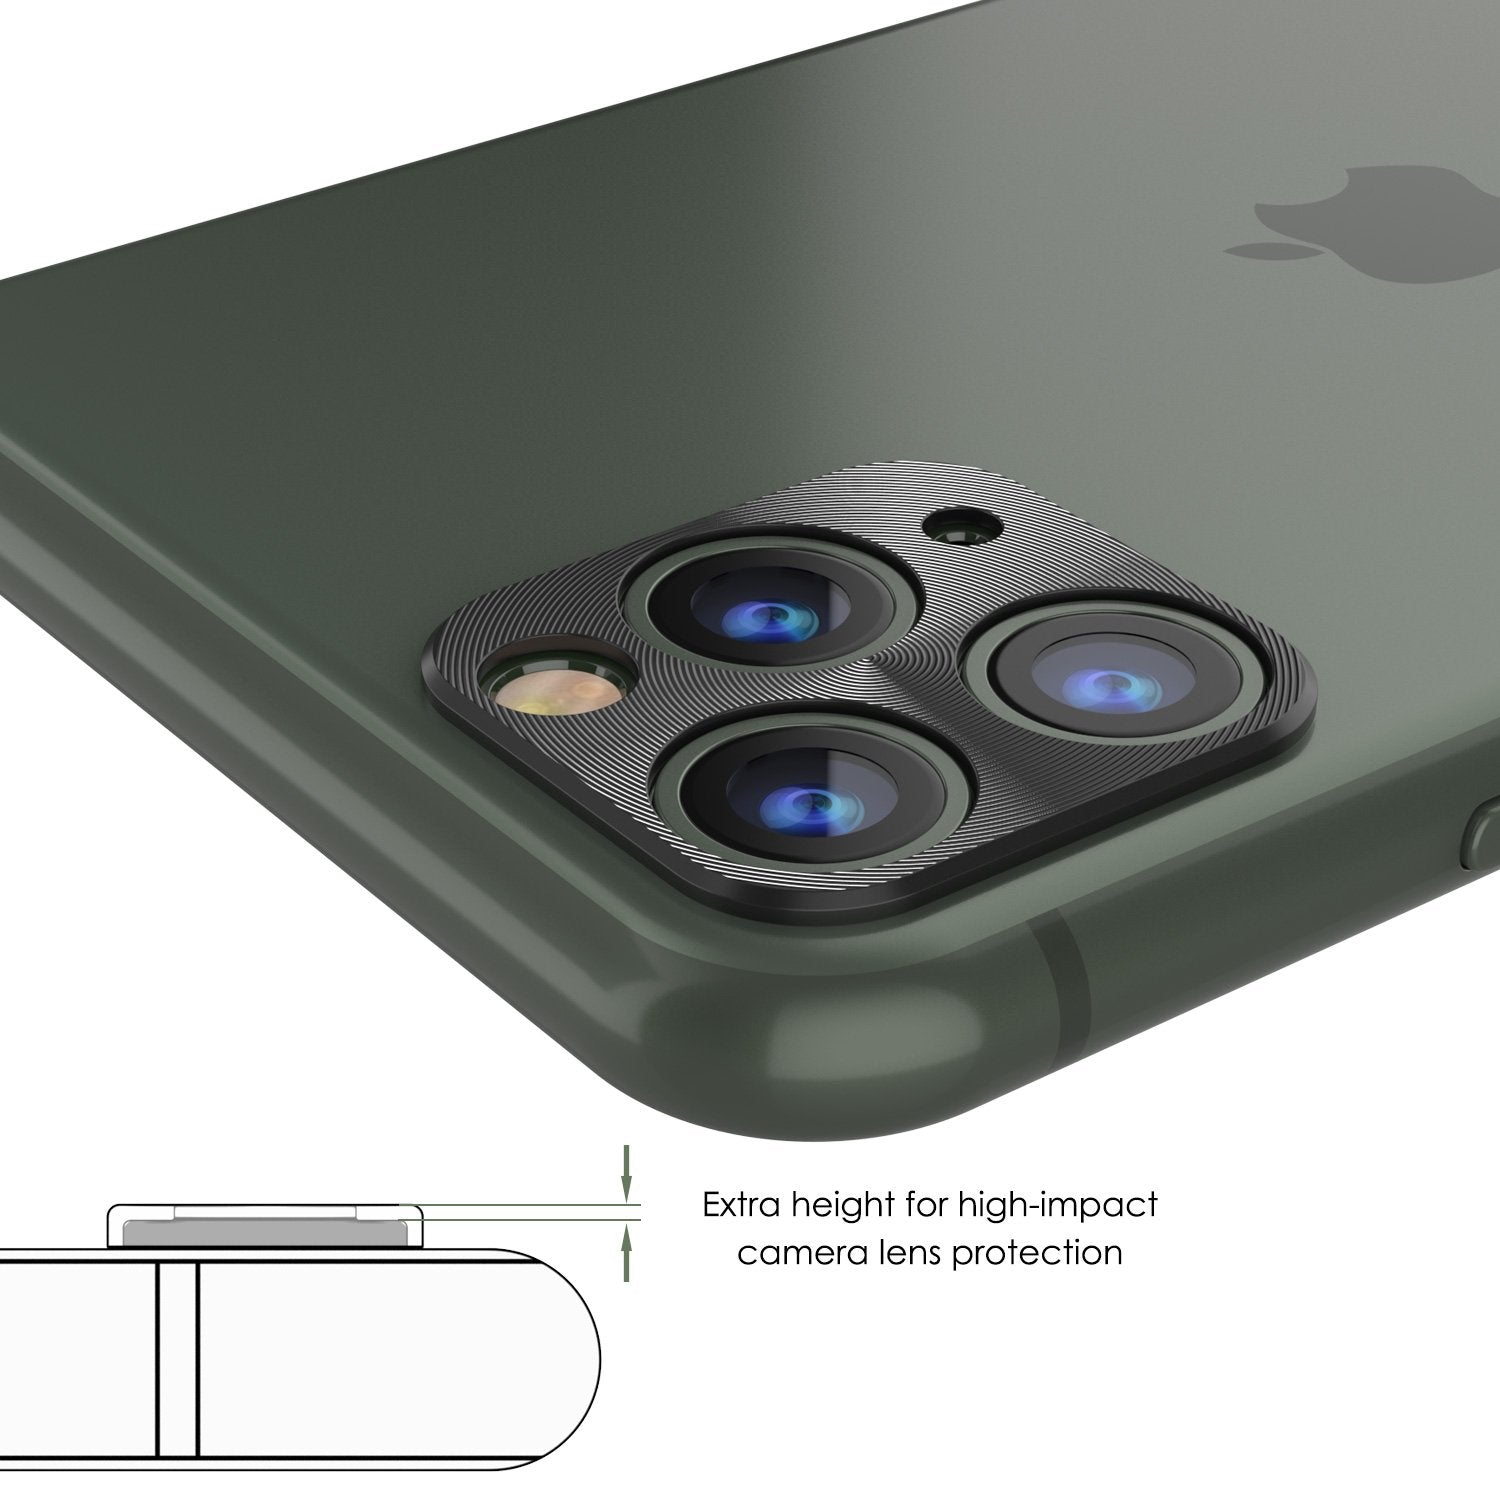 Punkcase iPhone 11 Pro Max Camera Protector Ring [Black]